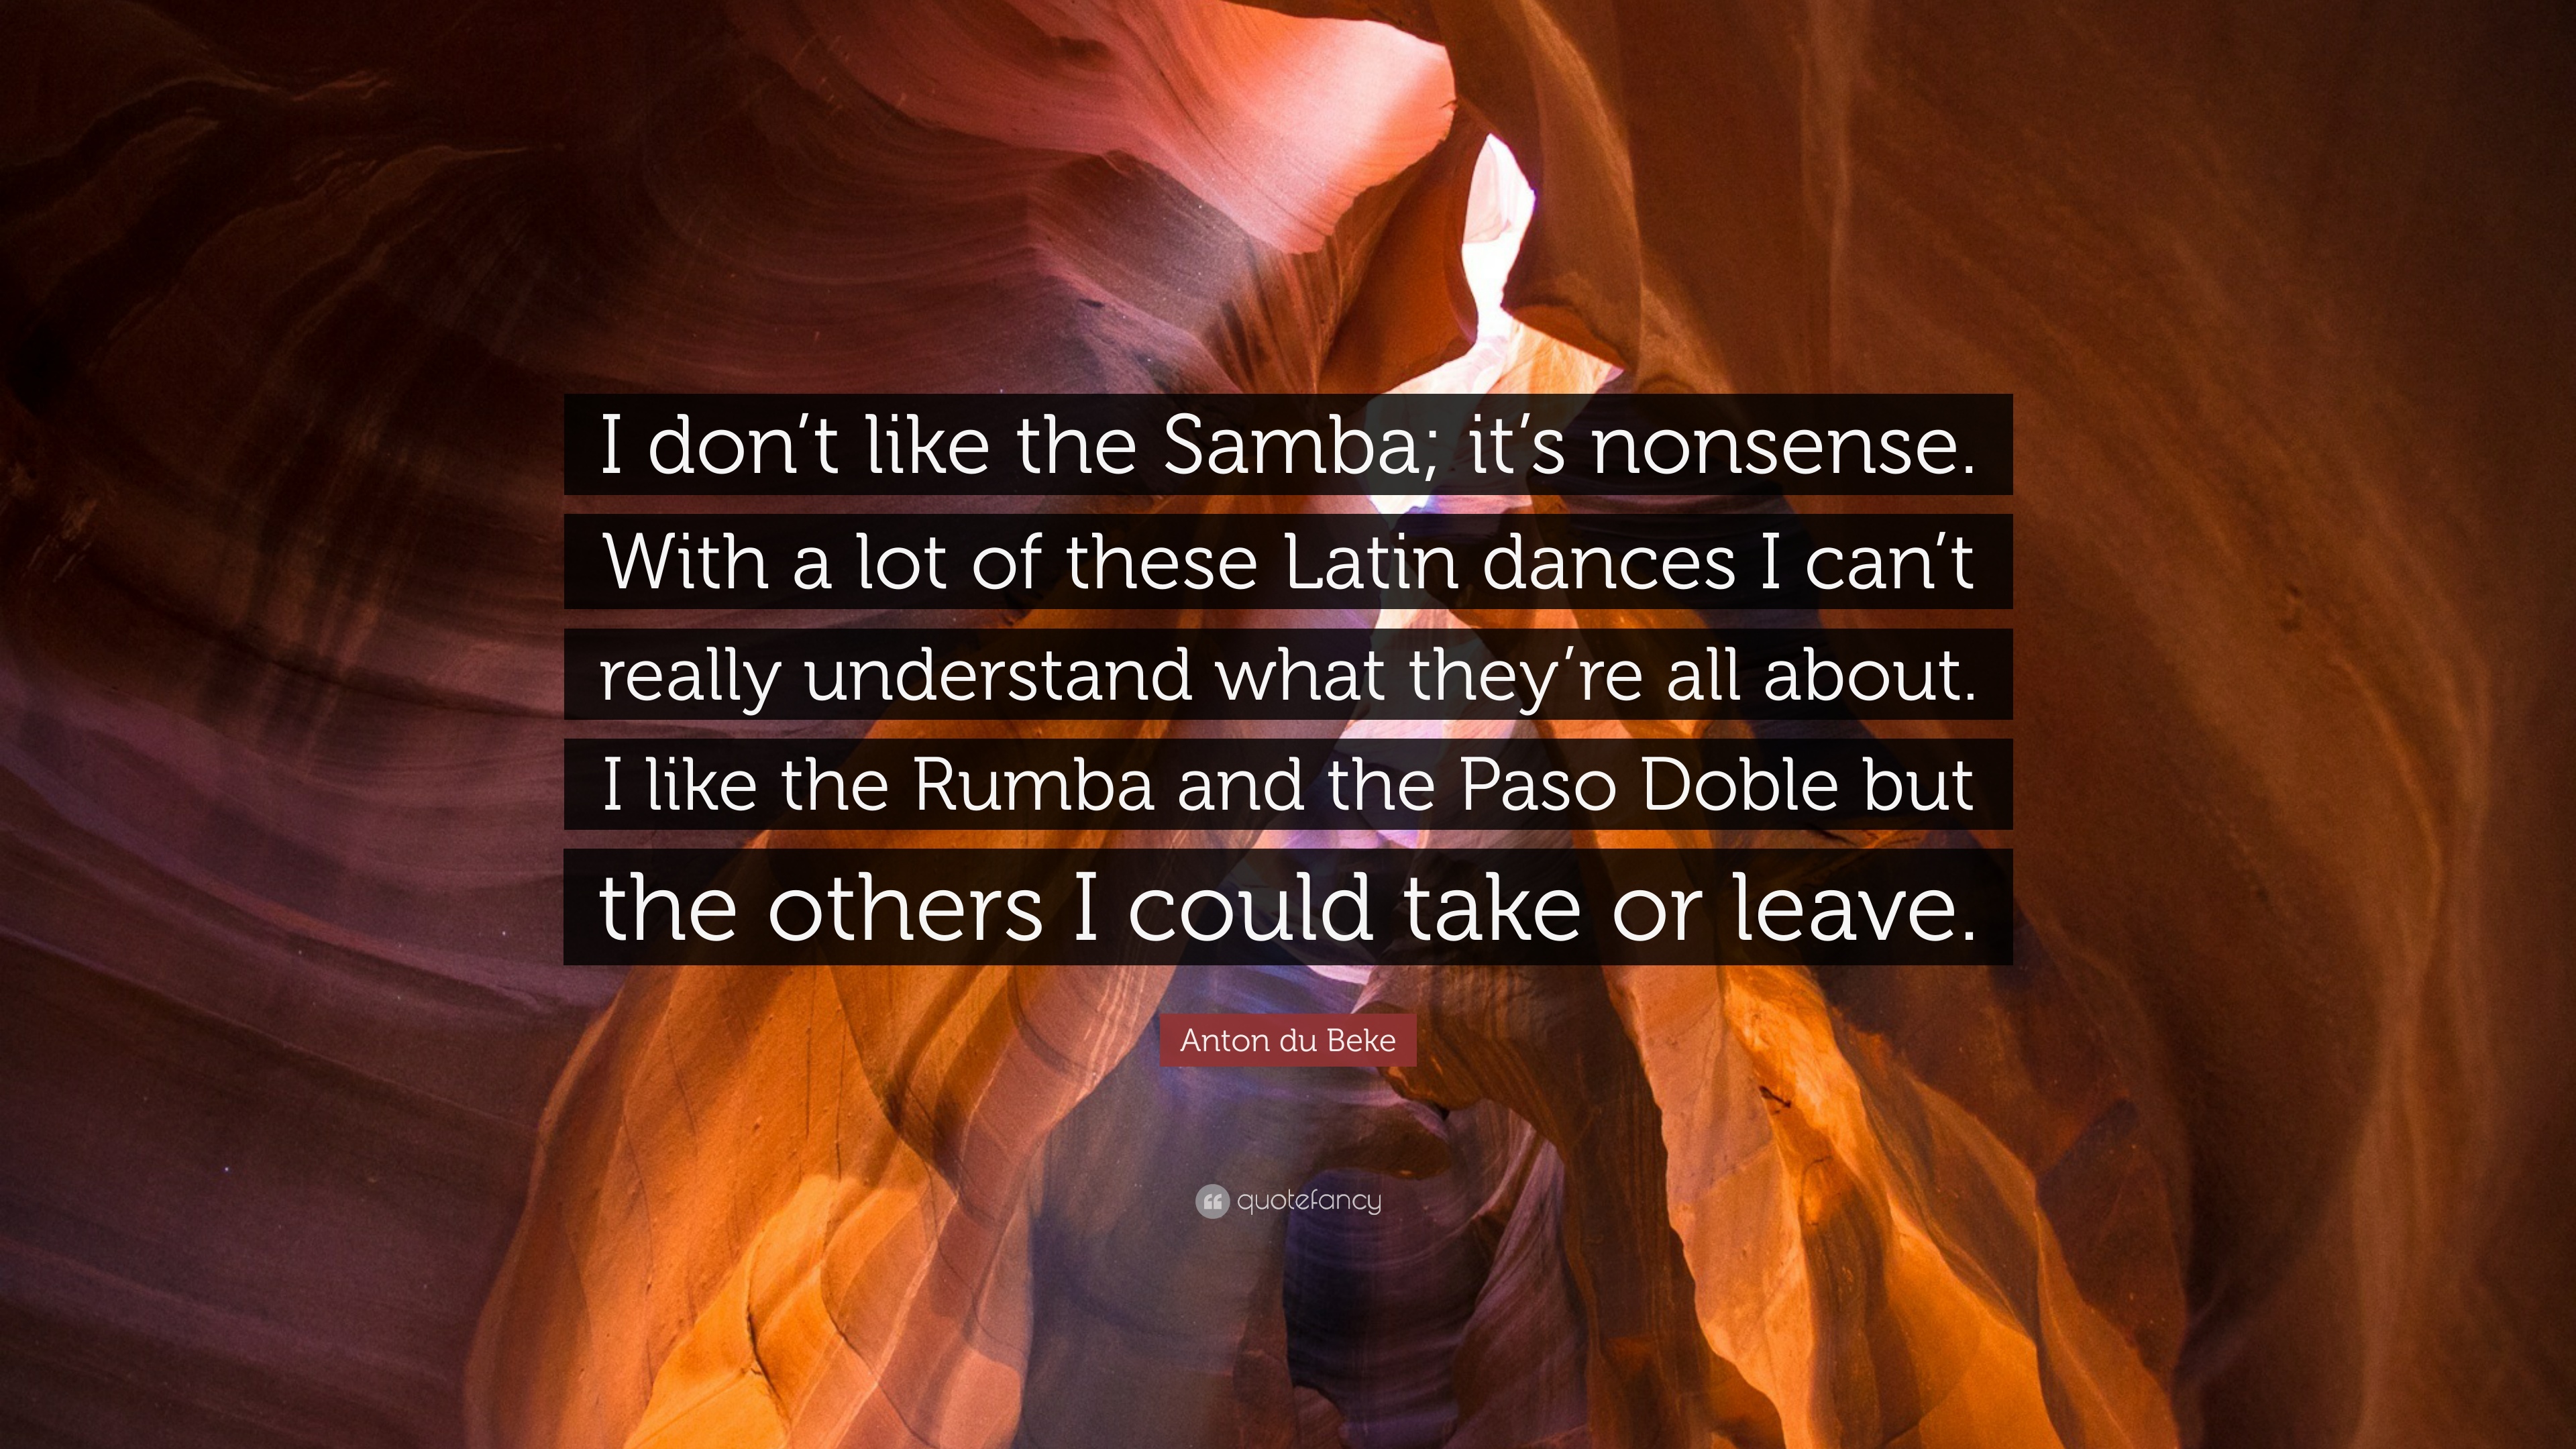 Anton du Beke Quote: “I don't like the Samba; it's nonsense. With a